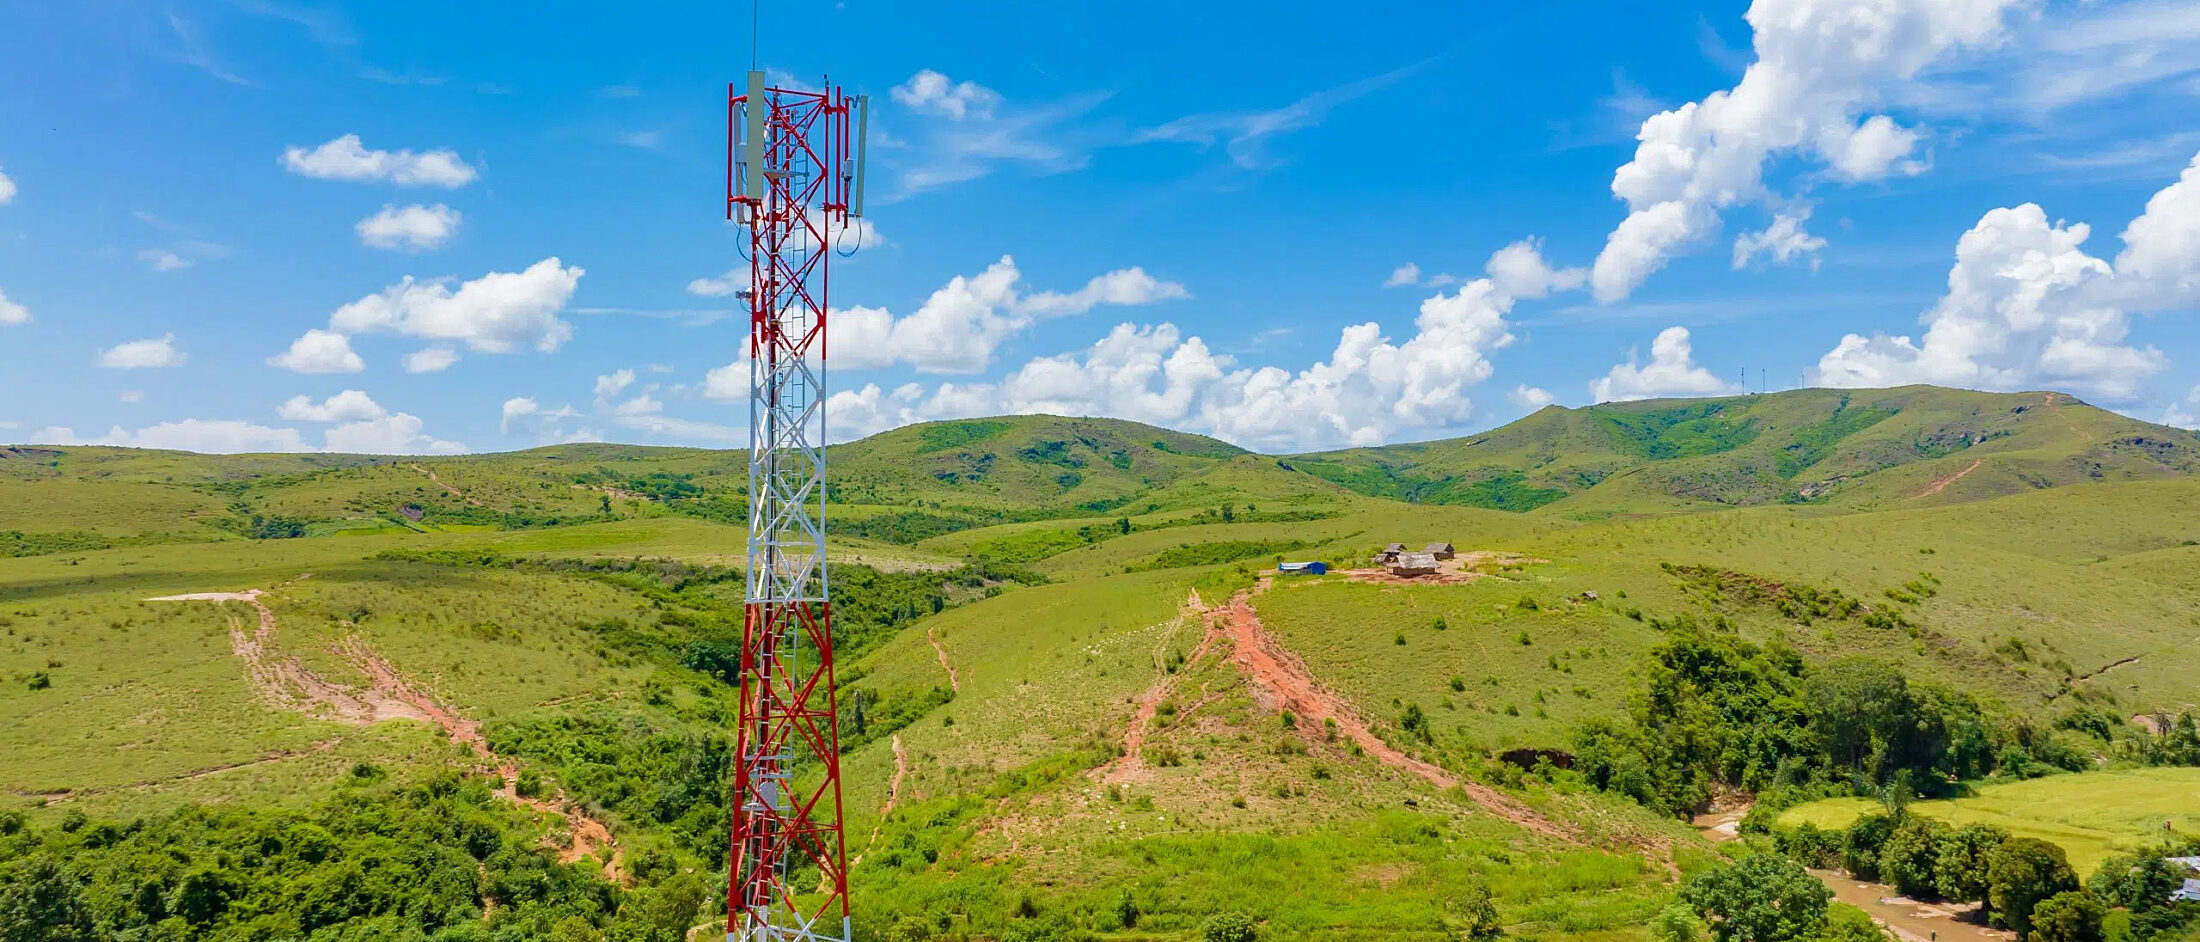 USD 40 M European Backing for Uganda Rural Telecom Expansion